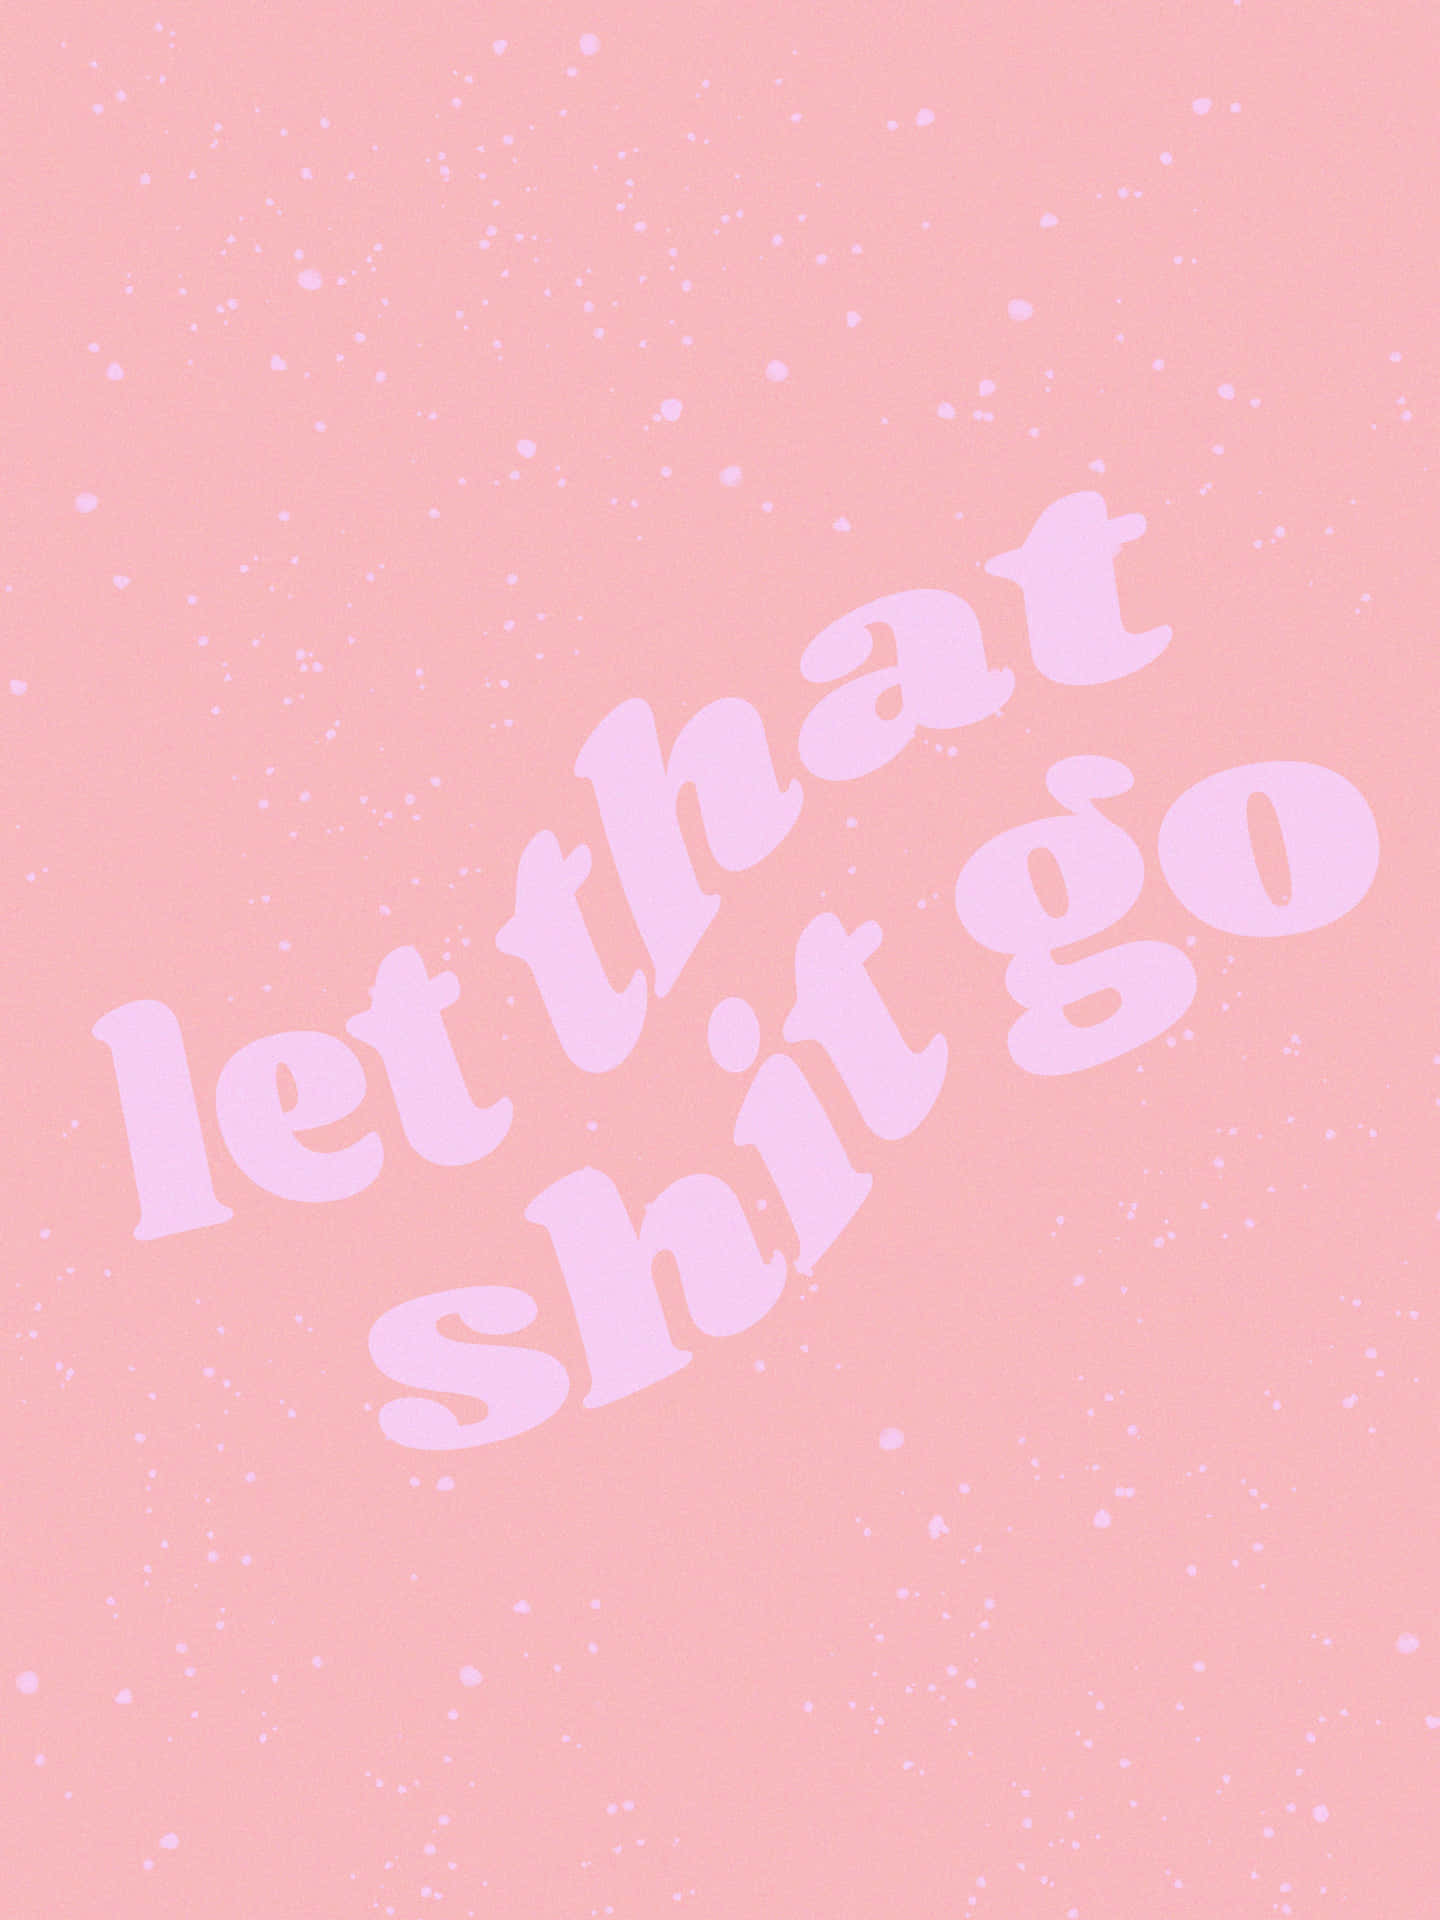 Let It Go Pink Background Wallpaper